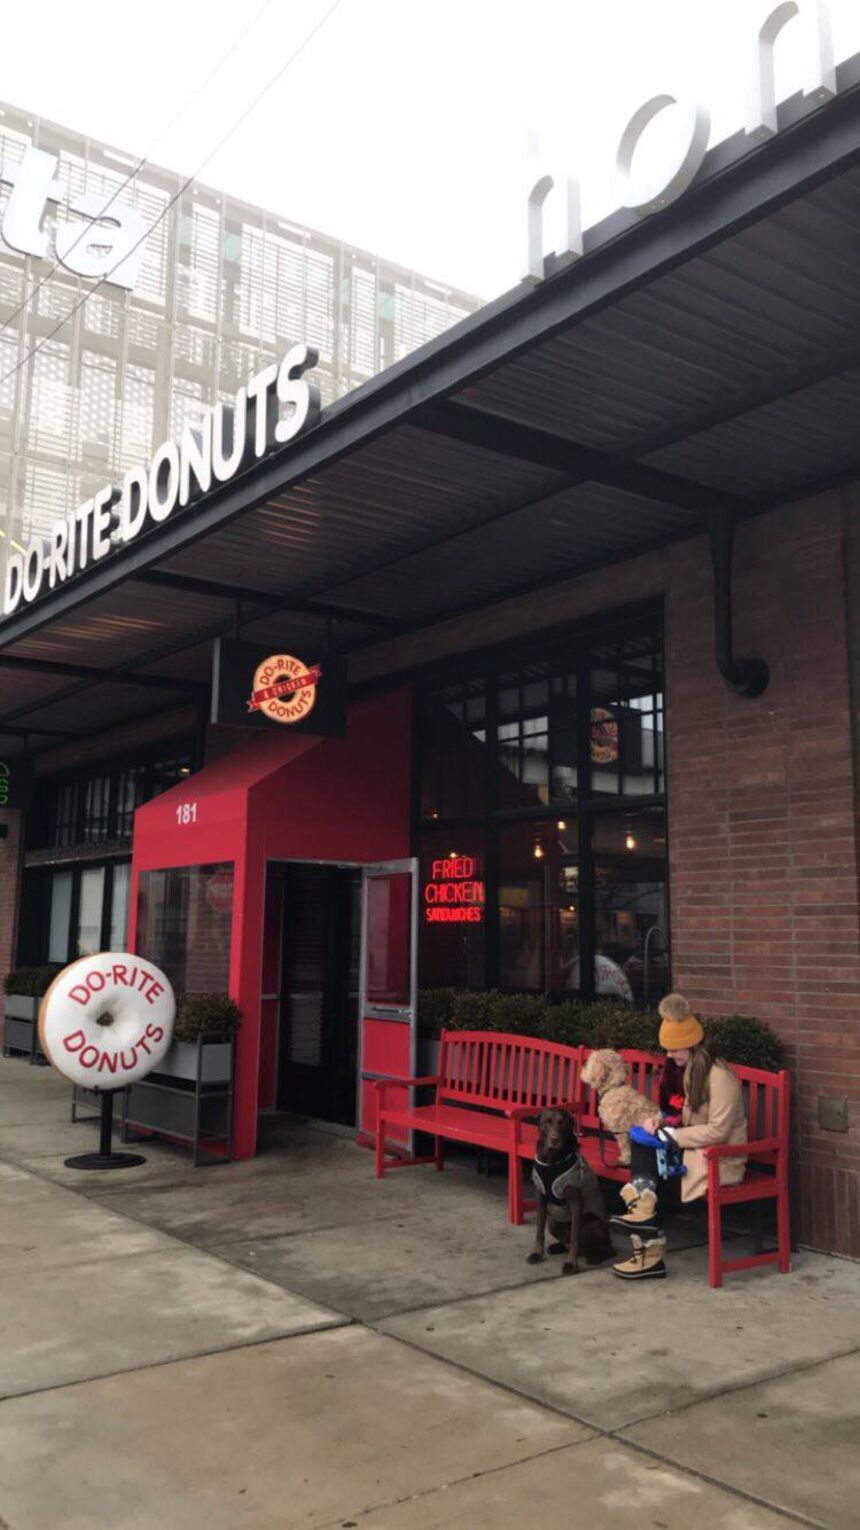 Do-Rite Donuts & Coffee, West Randolph Street